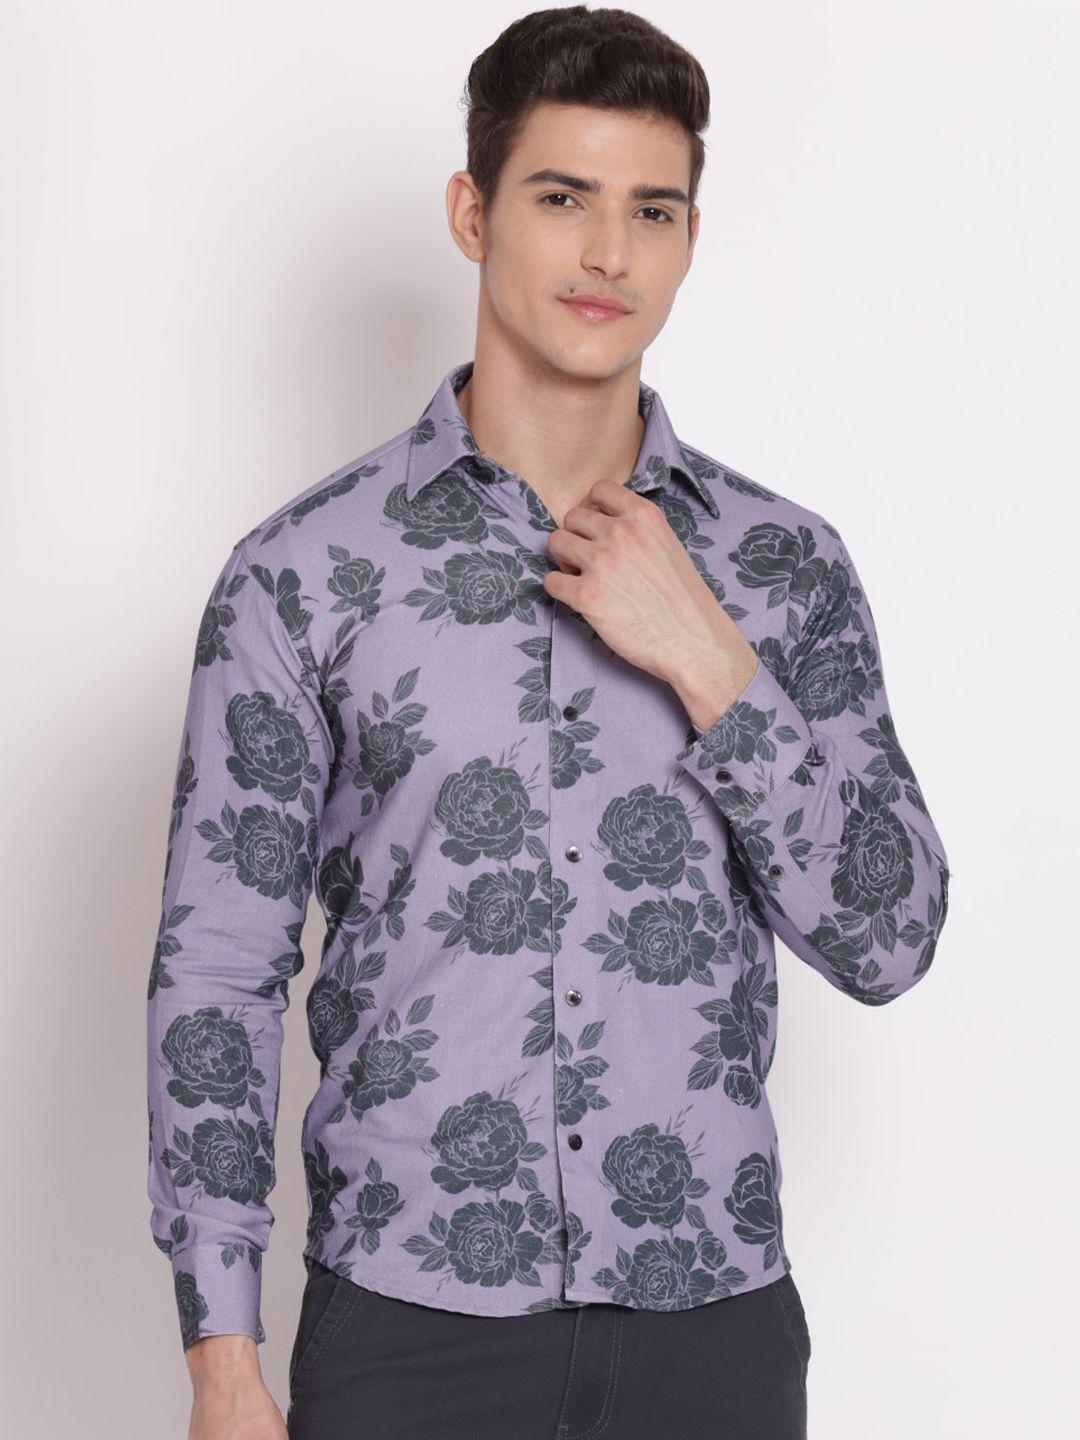 shurtz n skurtz men straight floral printed casual cotton shirt